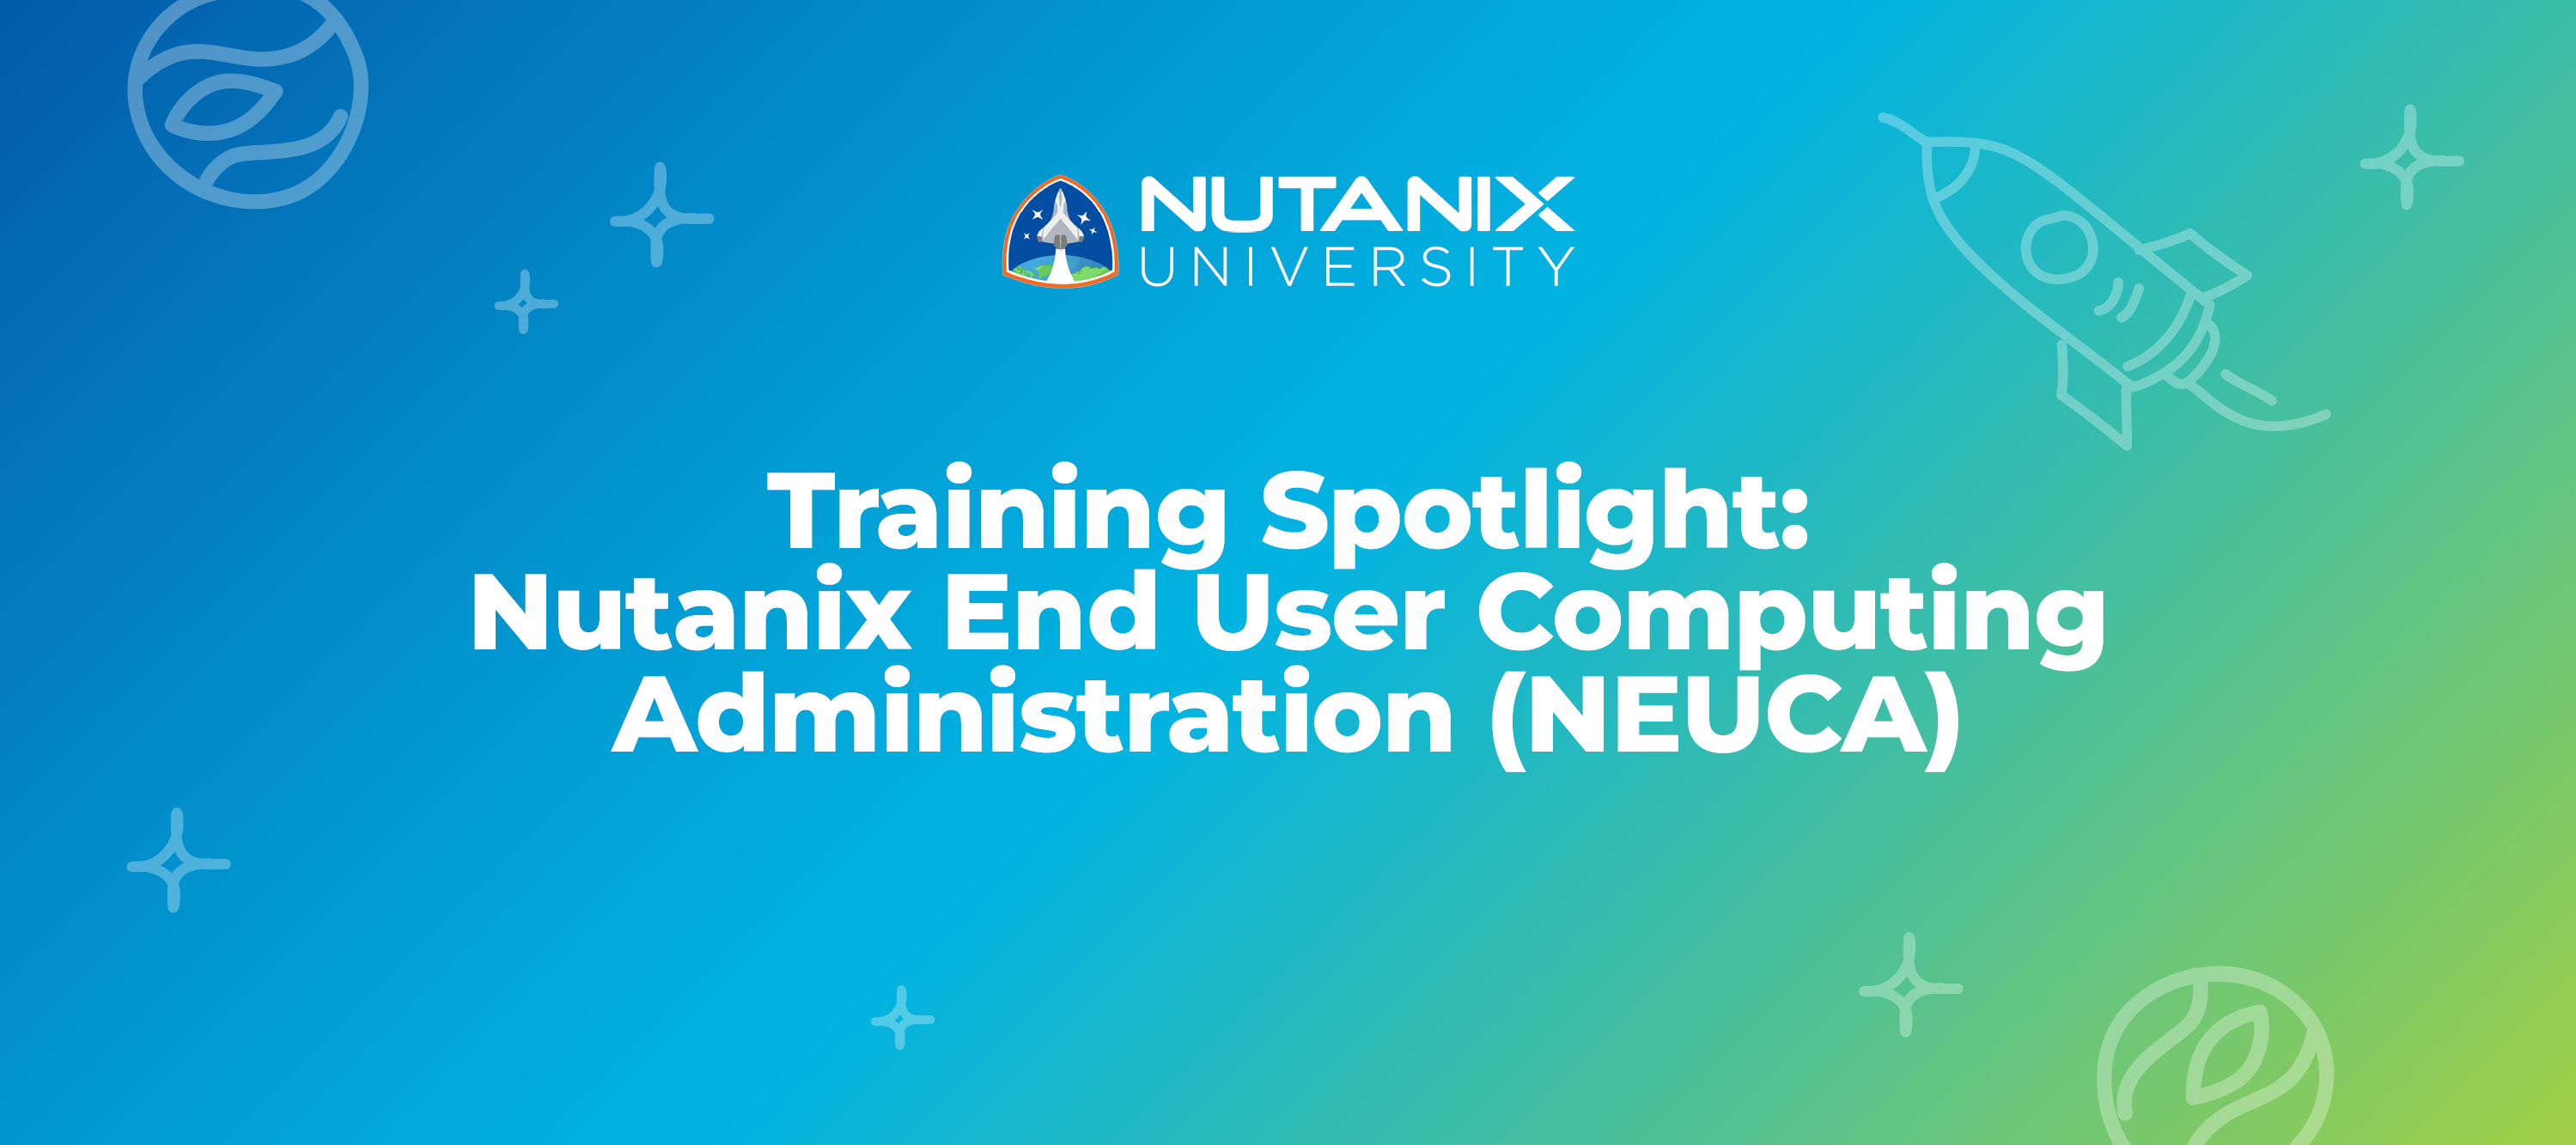 Training Spotlight: Nutanix End User Computing Administration (NEUCA)